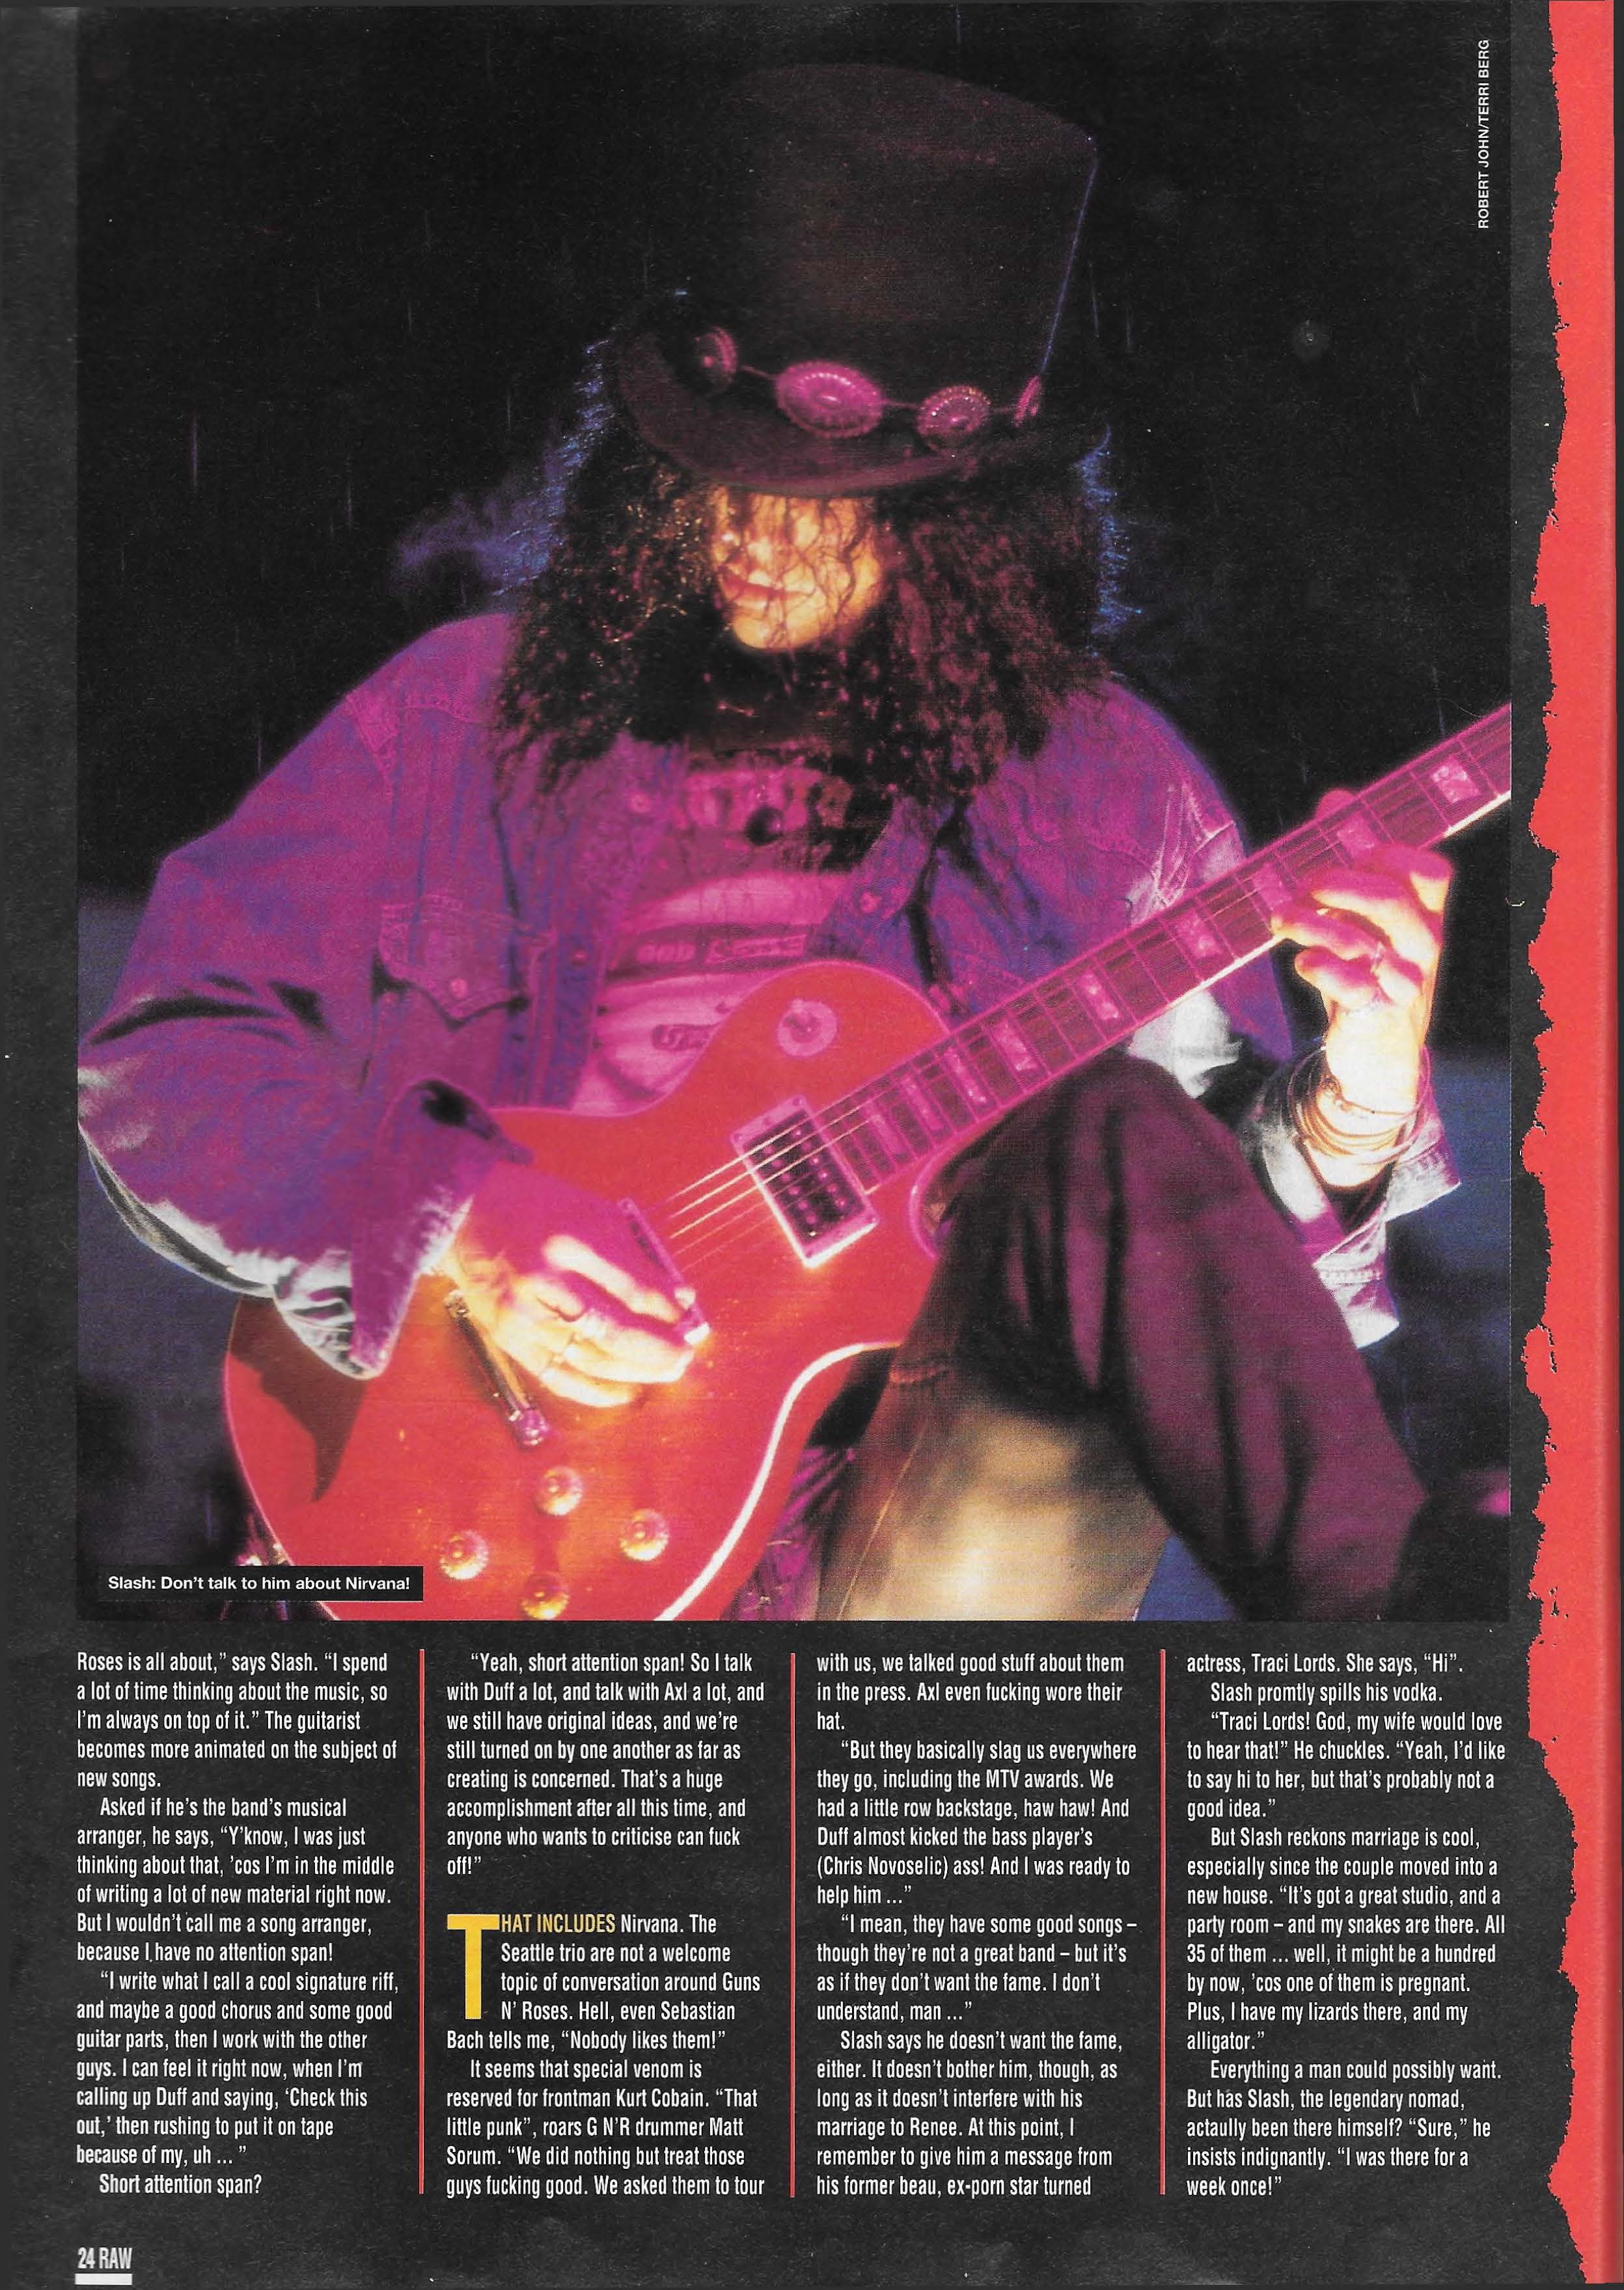 1993.06.23 - RAW magazine - "We're still turned on by one another" (Slash, Matt) 9QJUf5fj_o